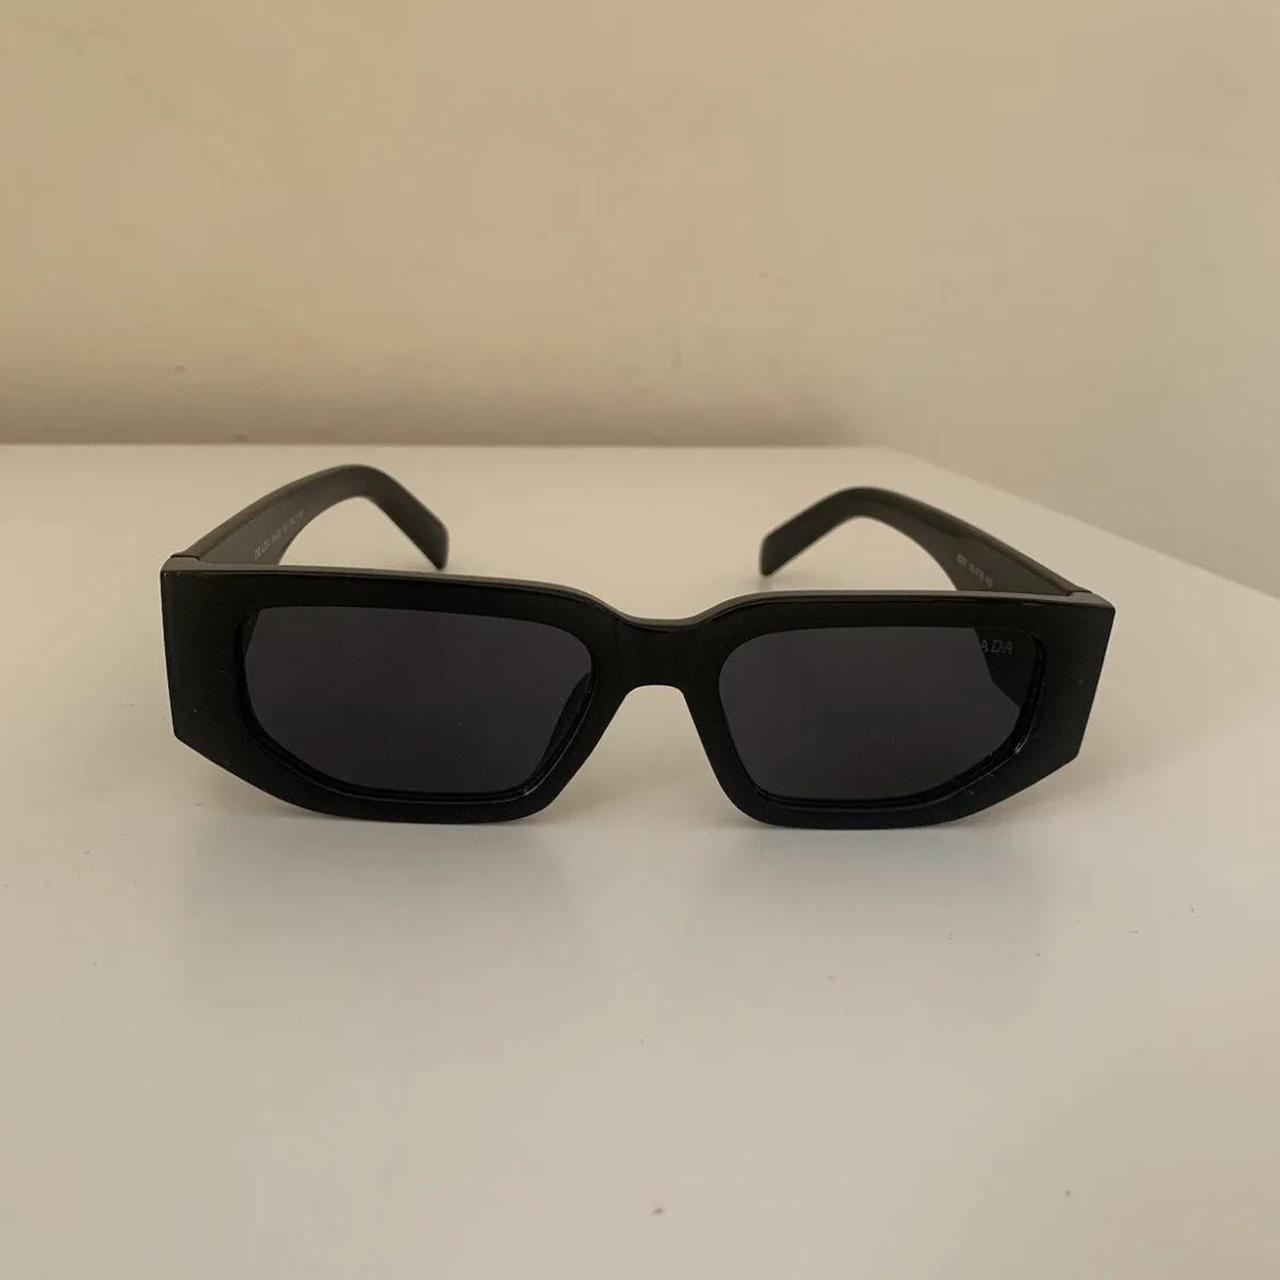 Prada Sunglasses Black - New With The Box - Depop